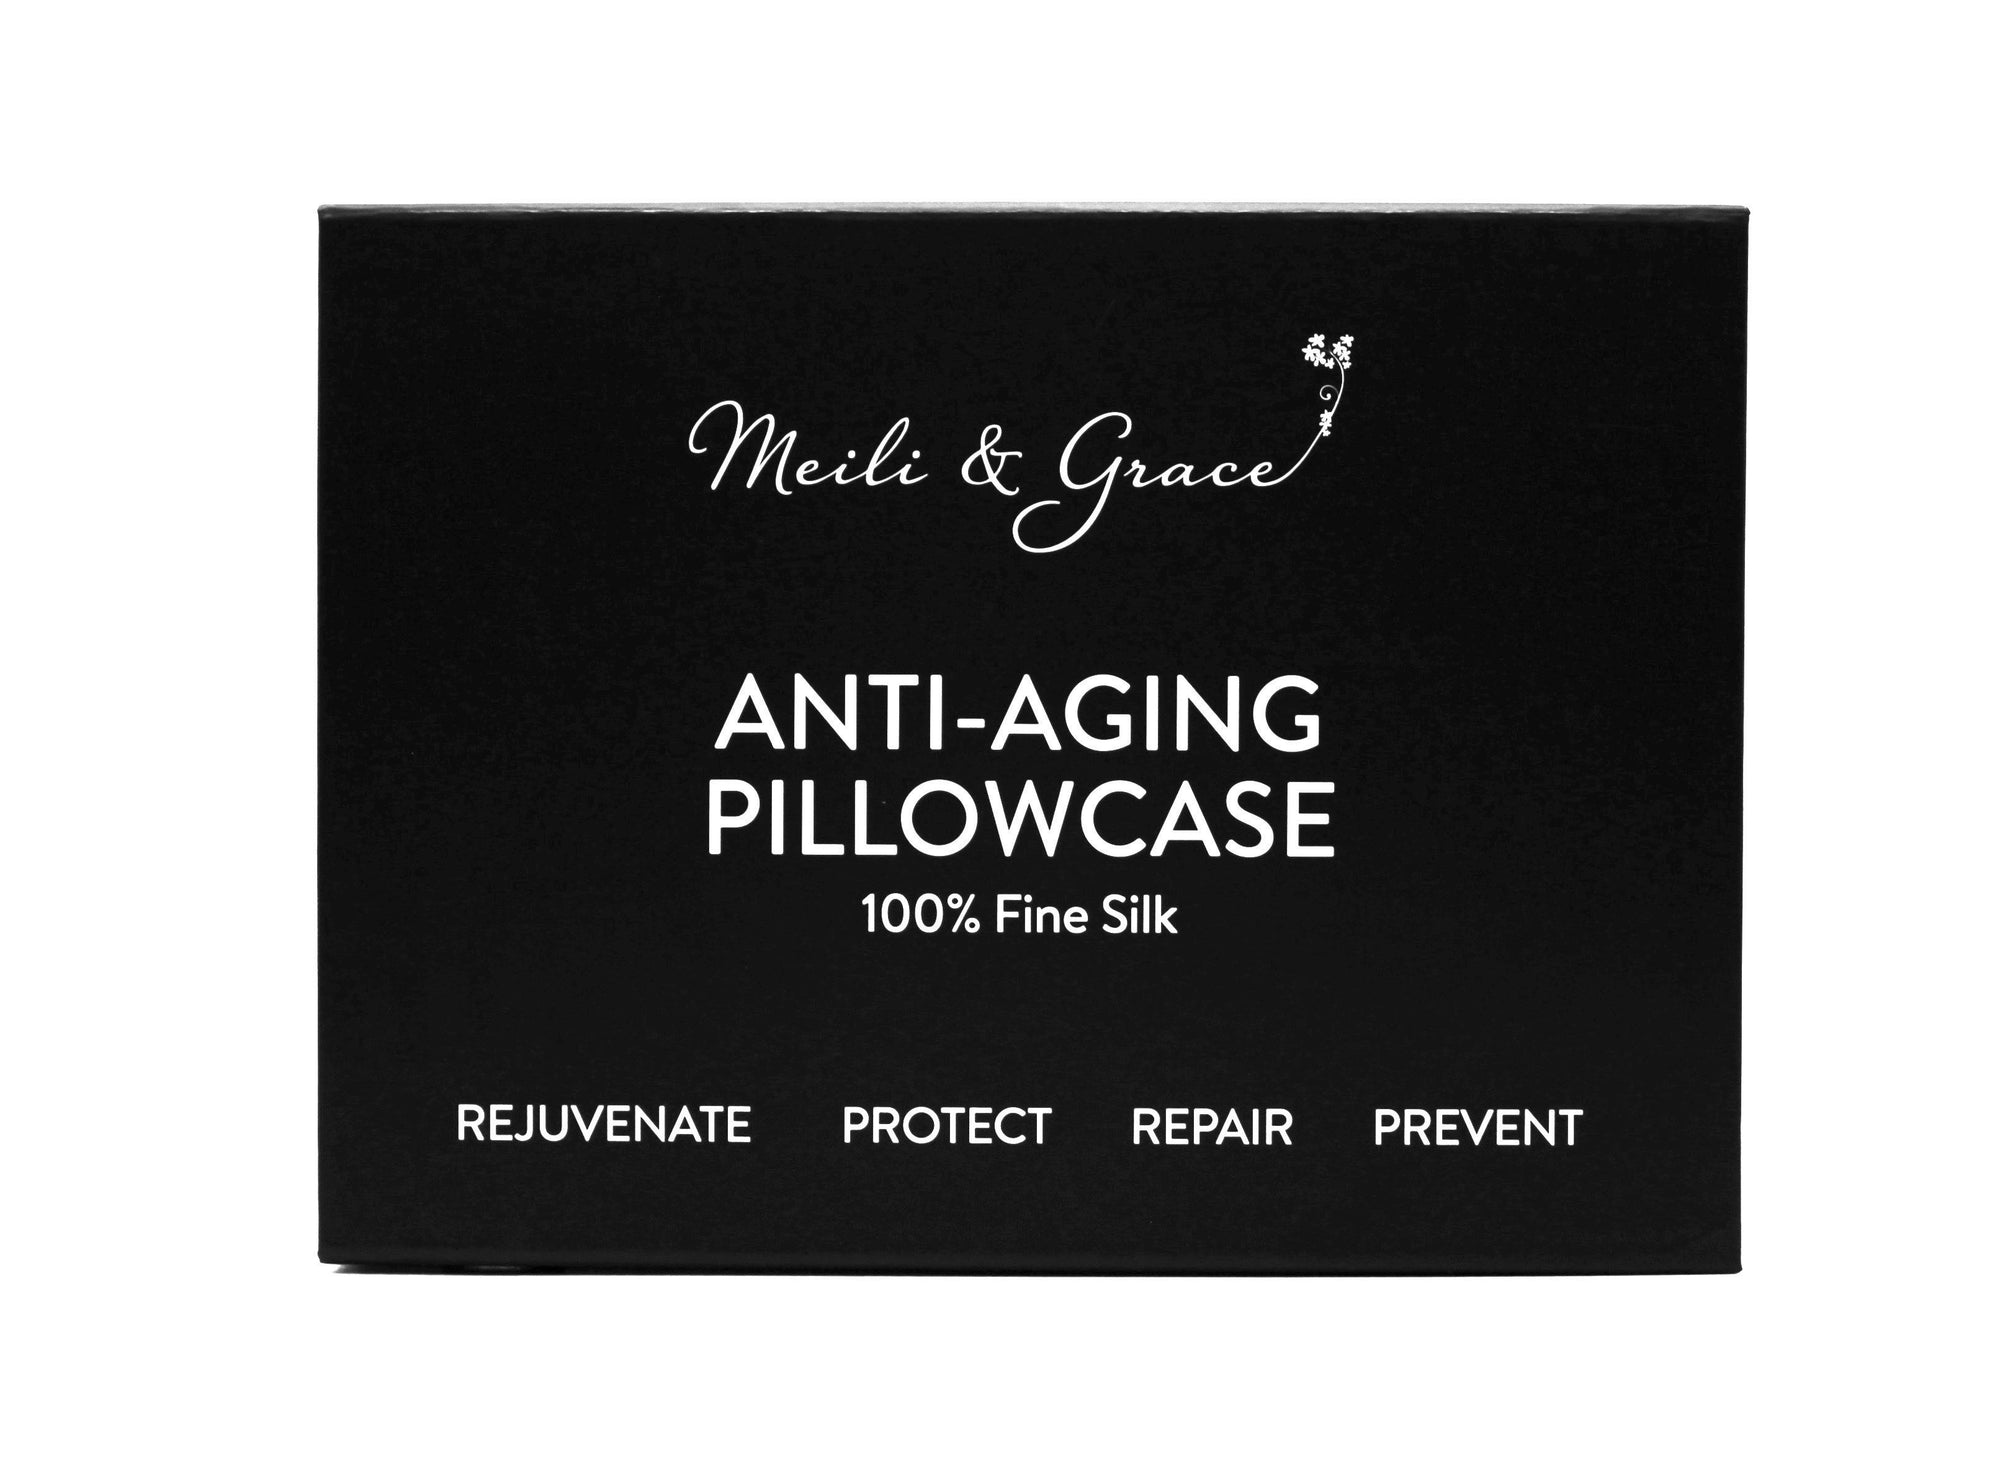 The Original Anti-Aging Pillowcase - Since 2006